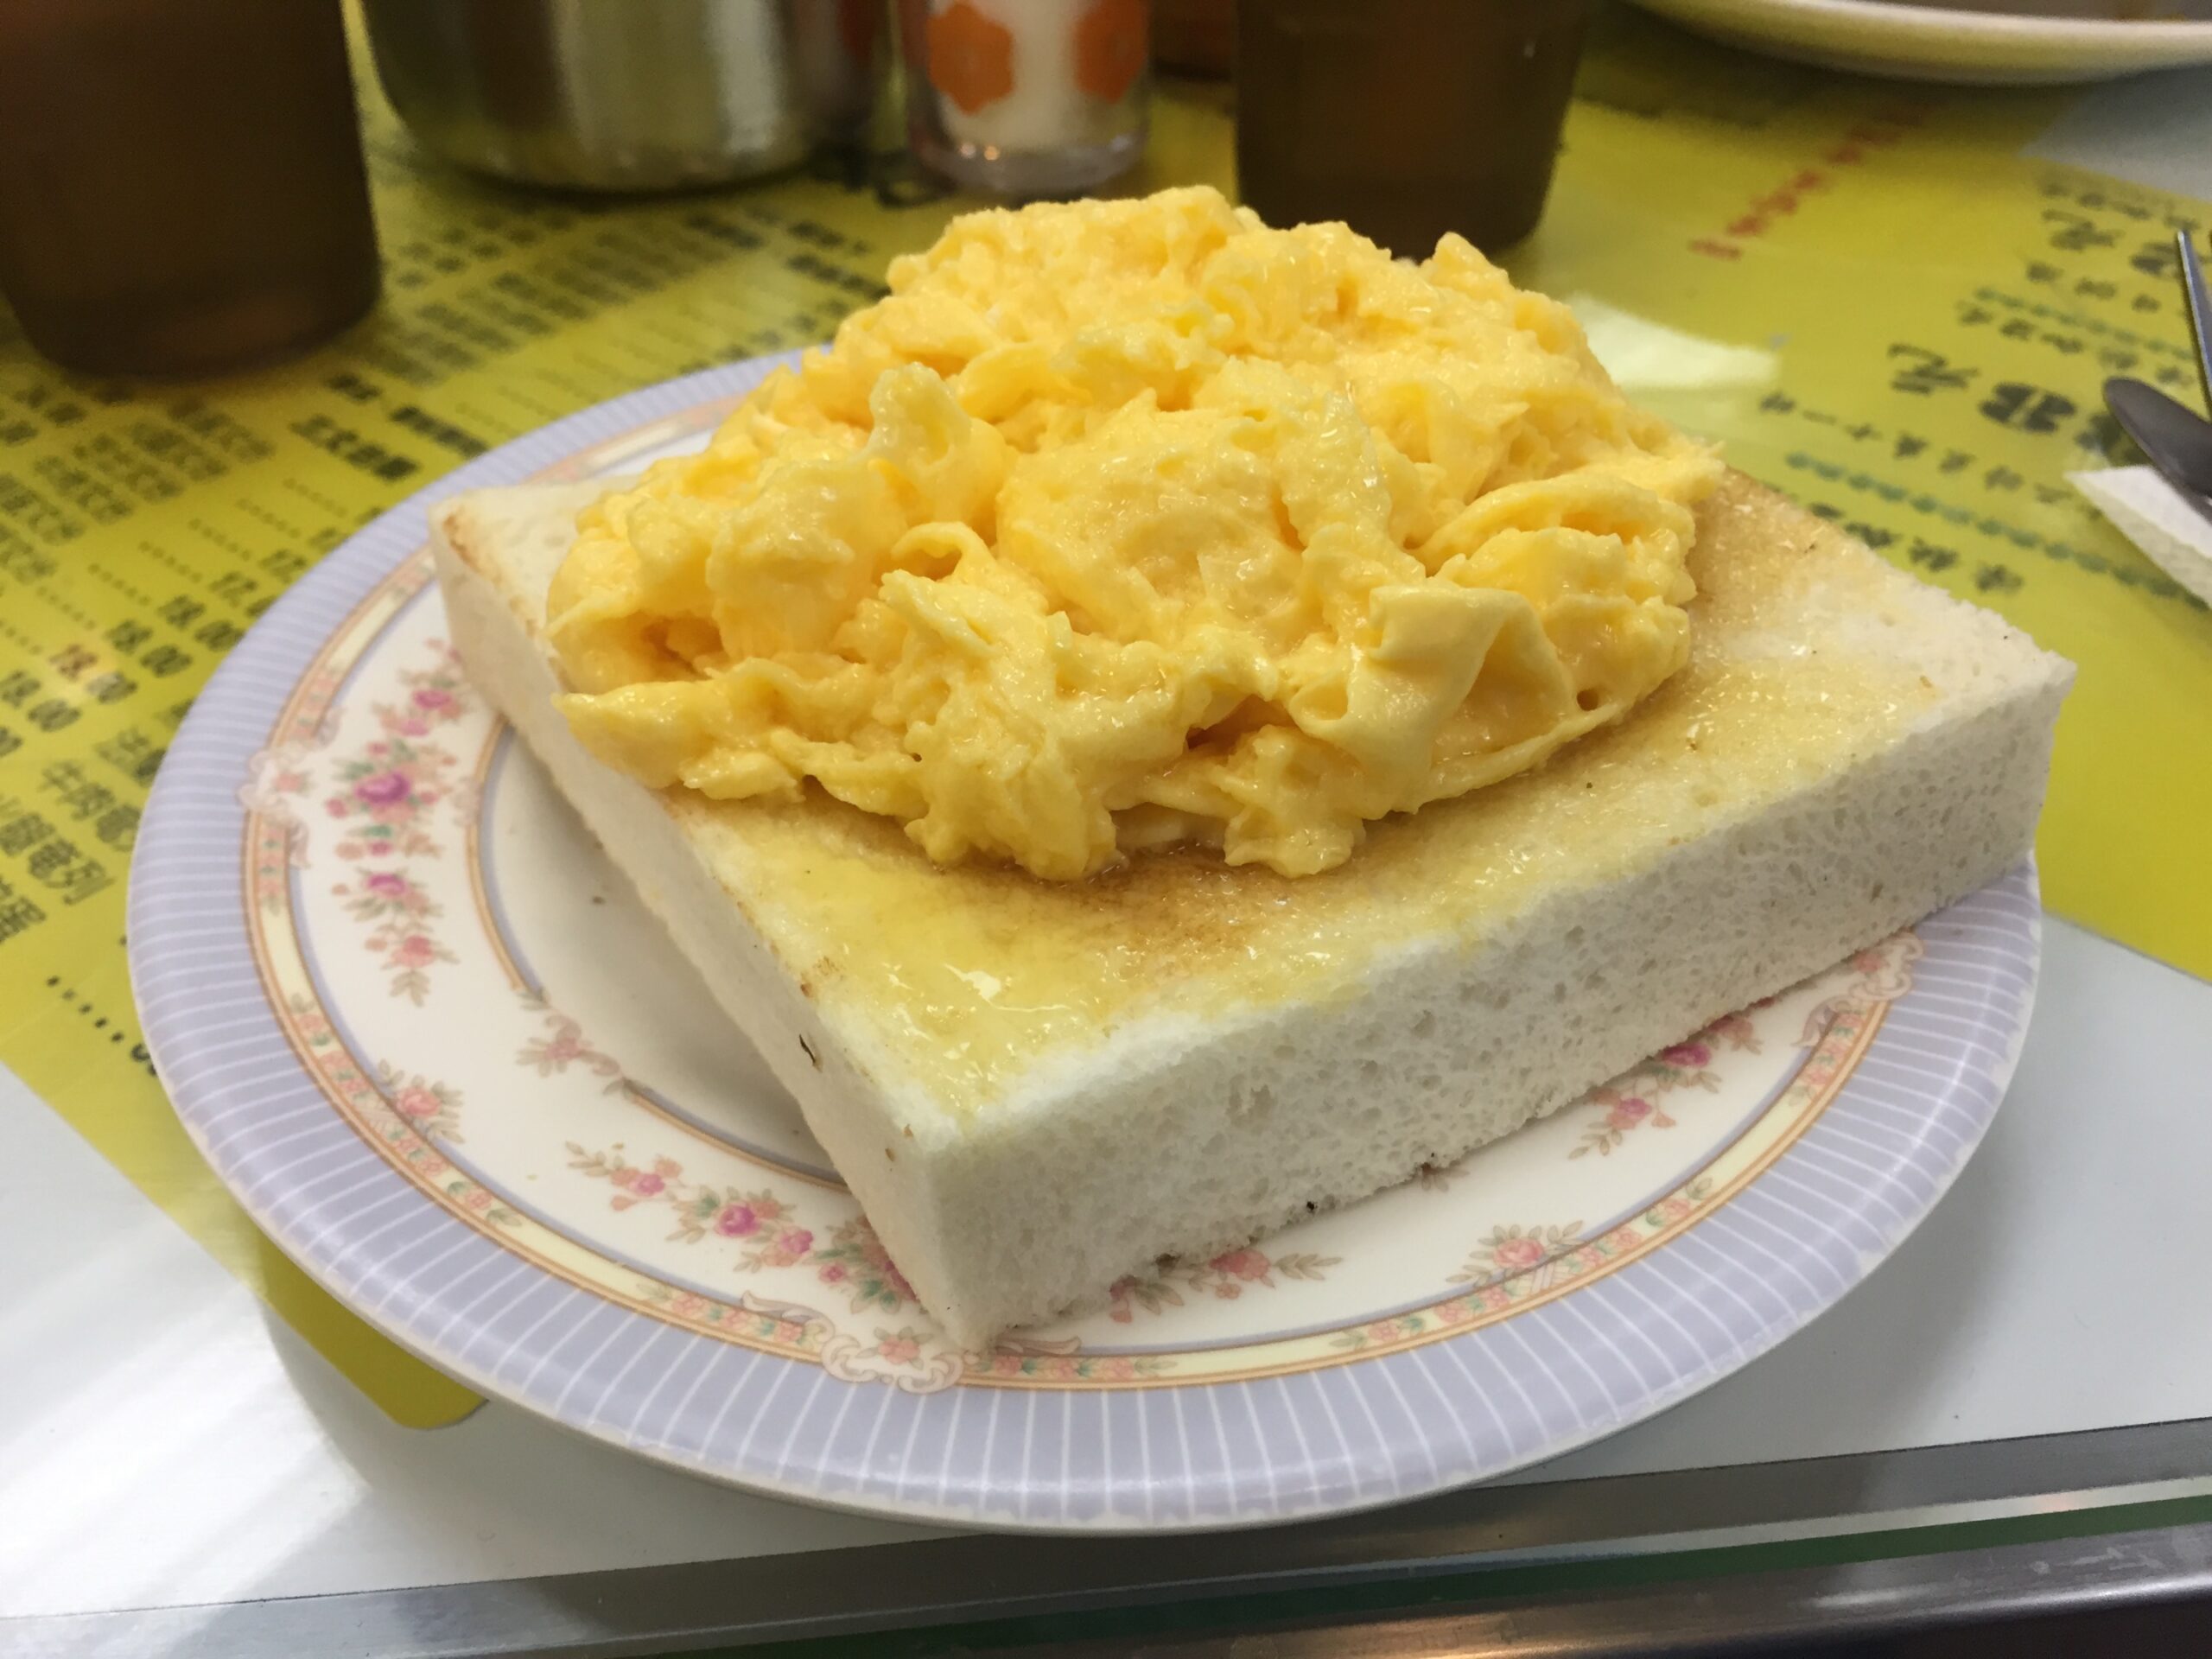 Fluffy scrambled eggs and toast are the Australia Dairy Company's signature dish.